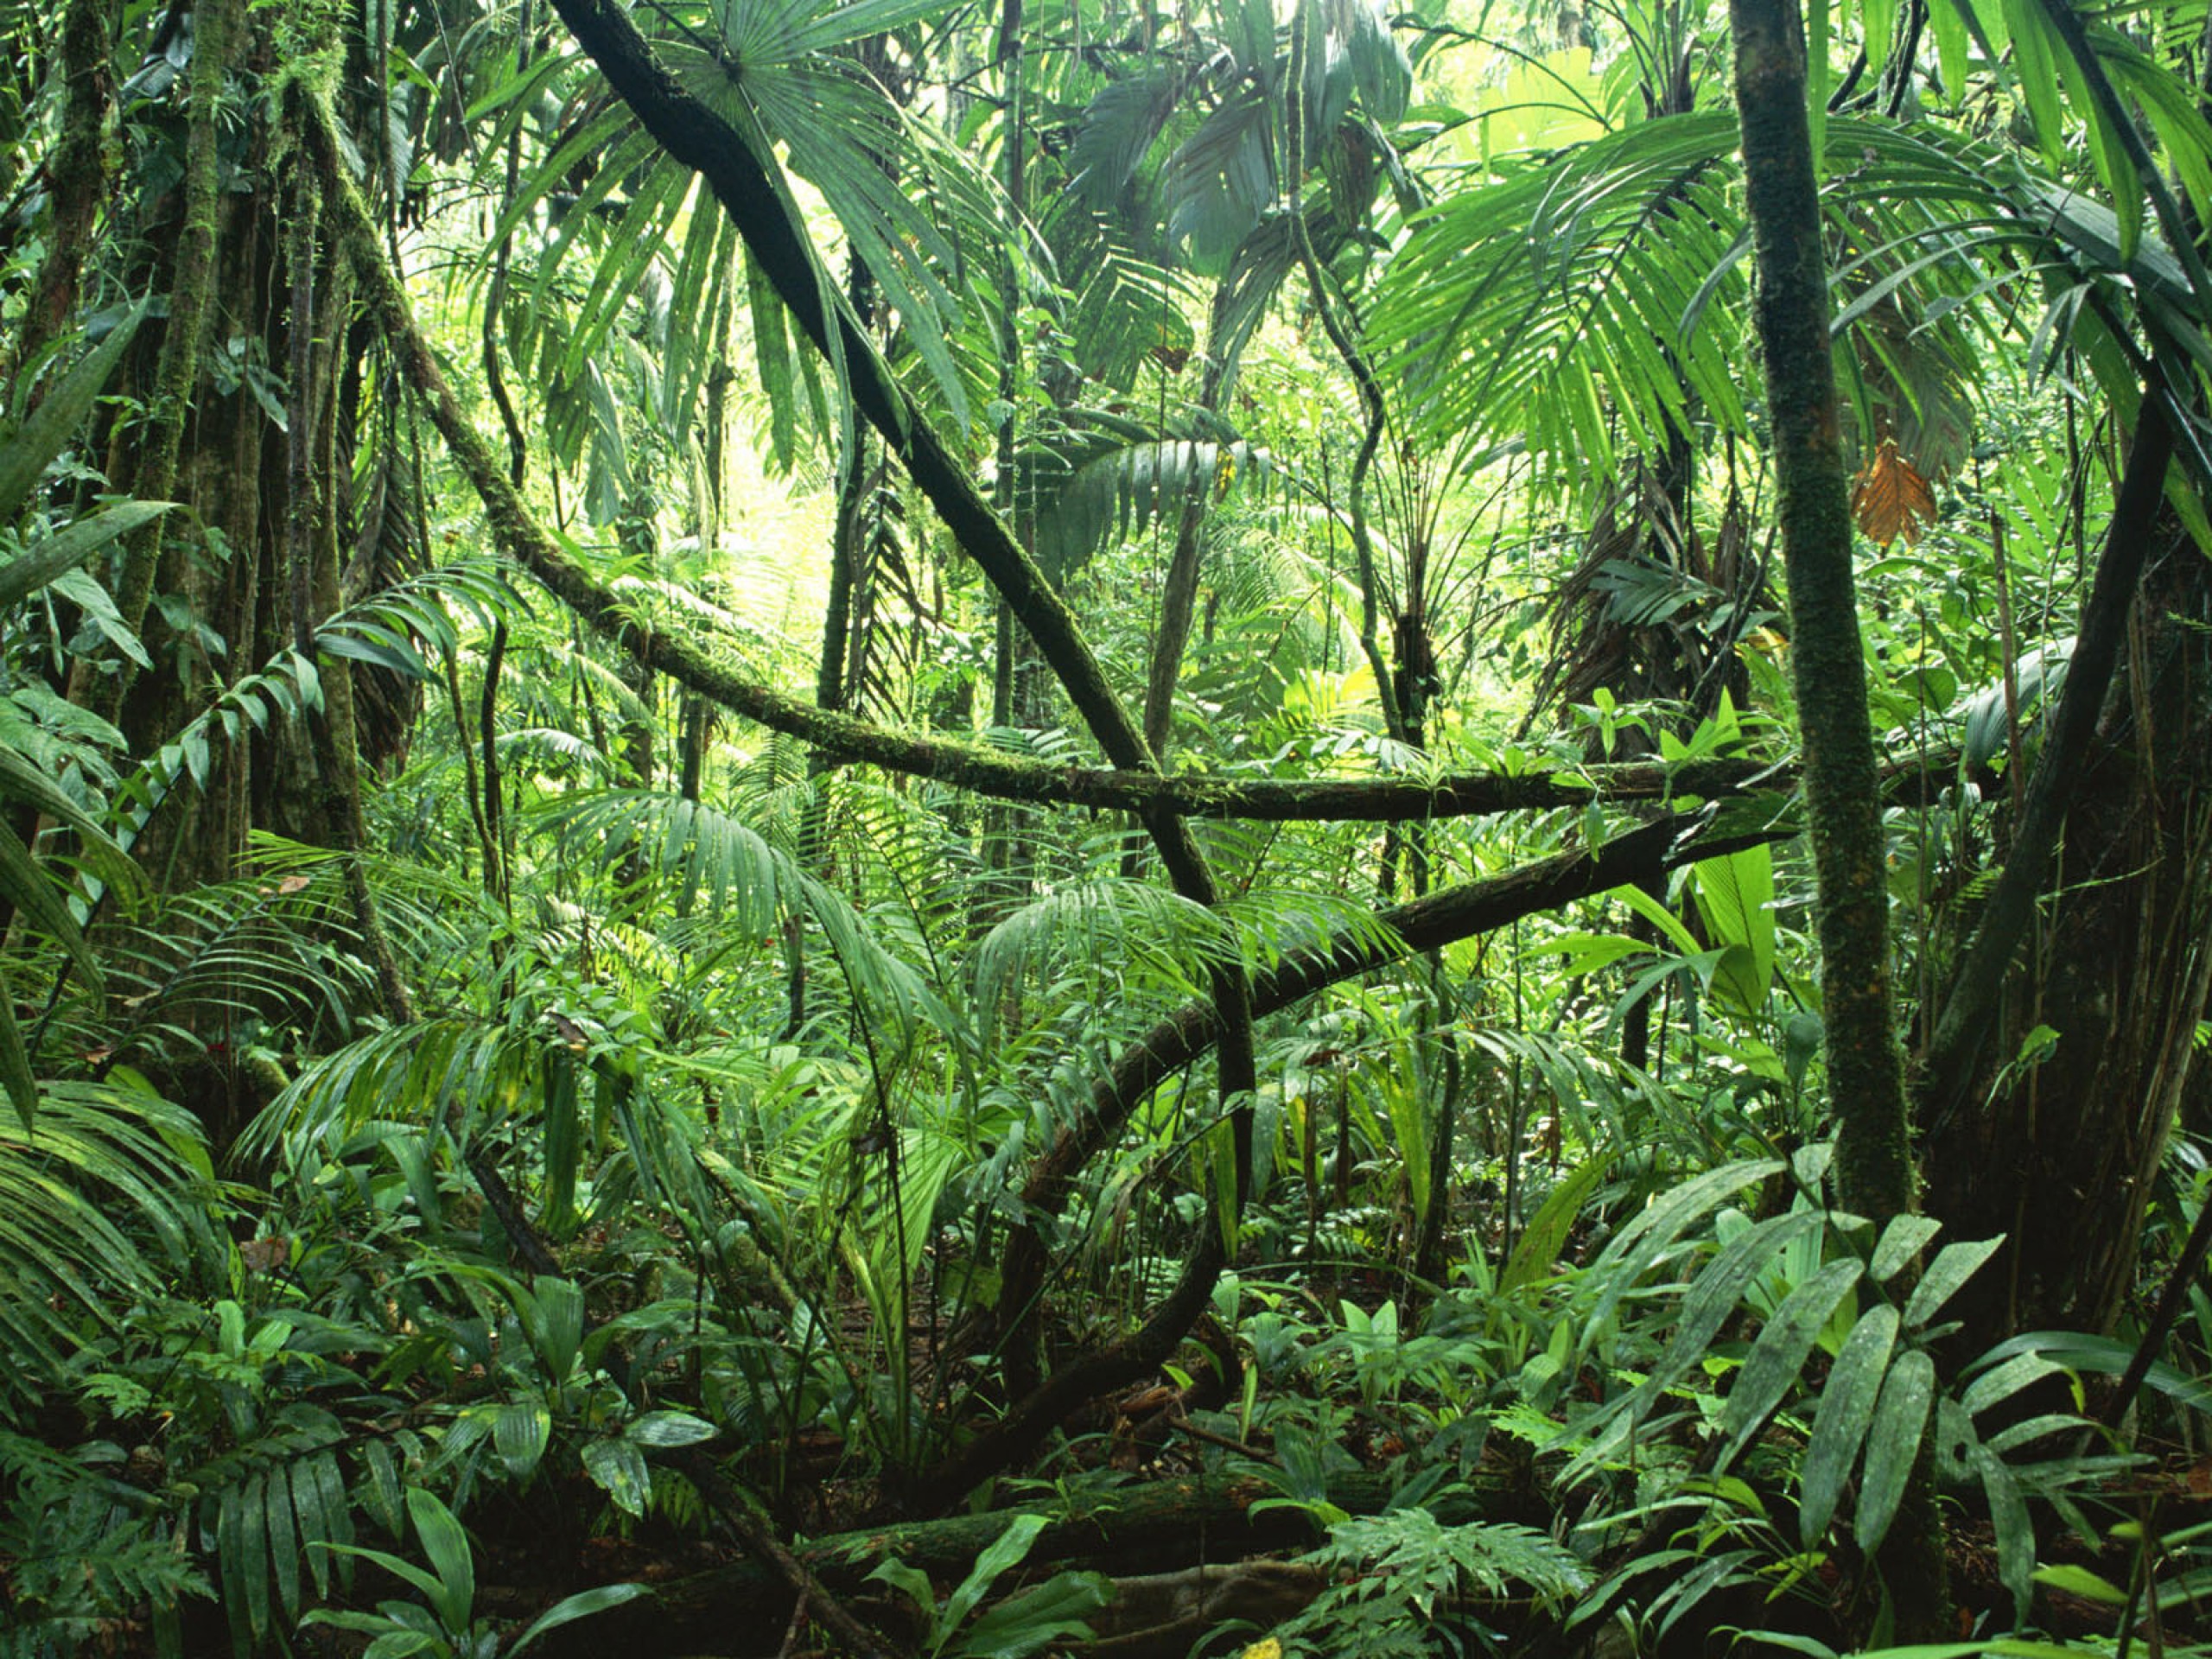 rainforest clipart